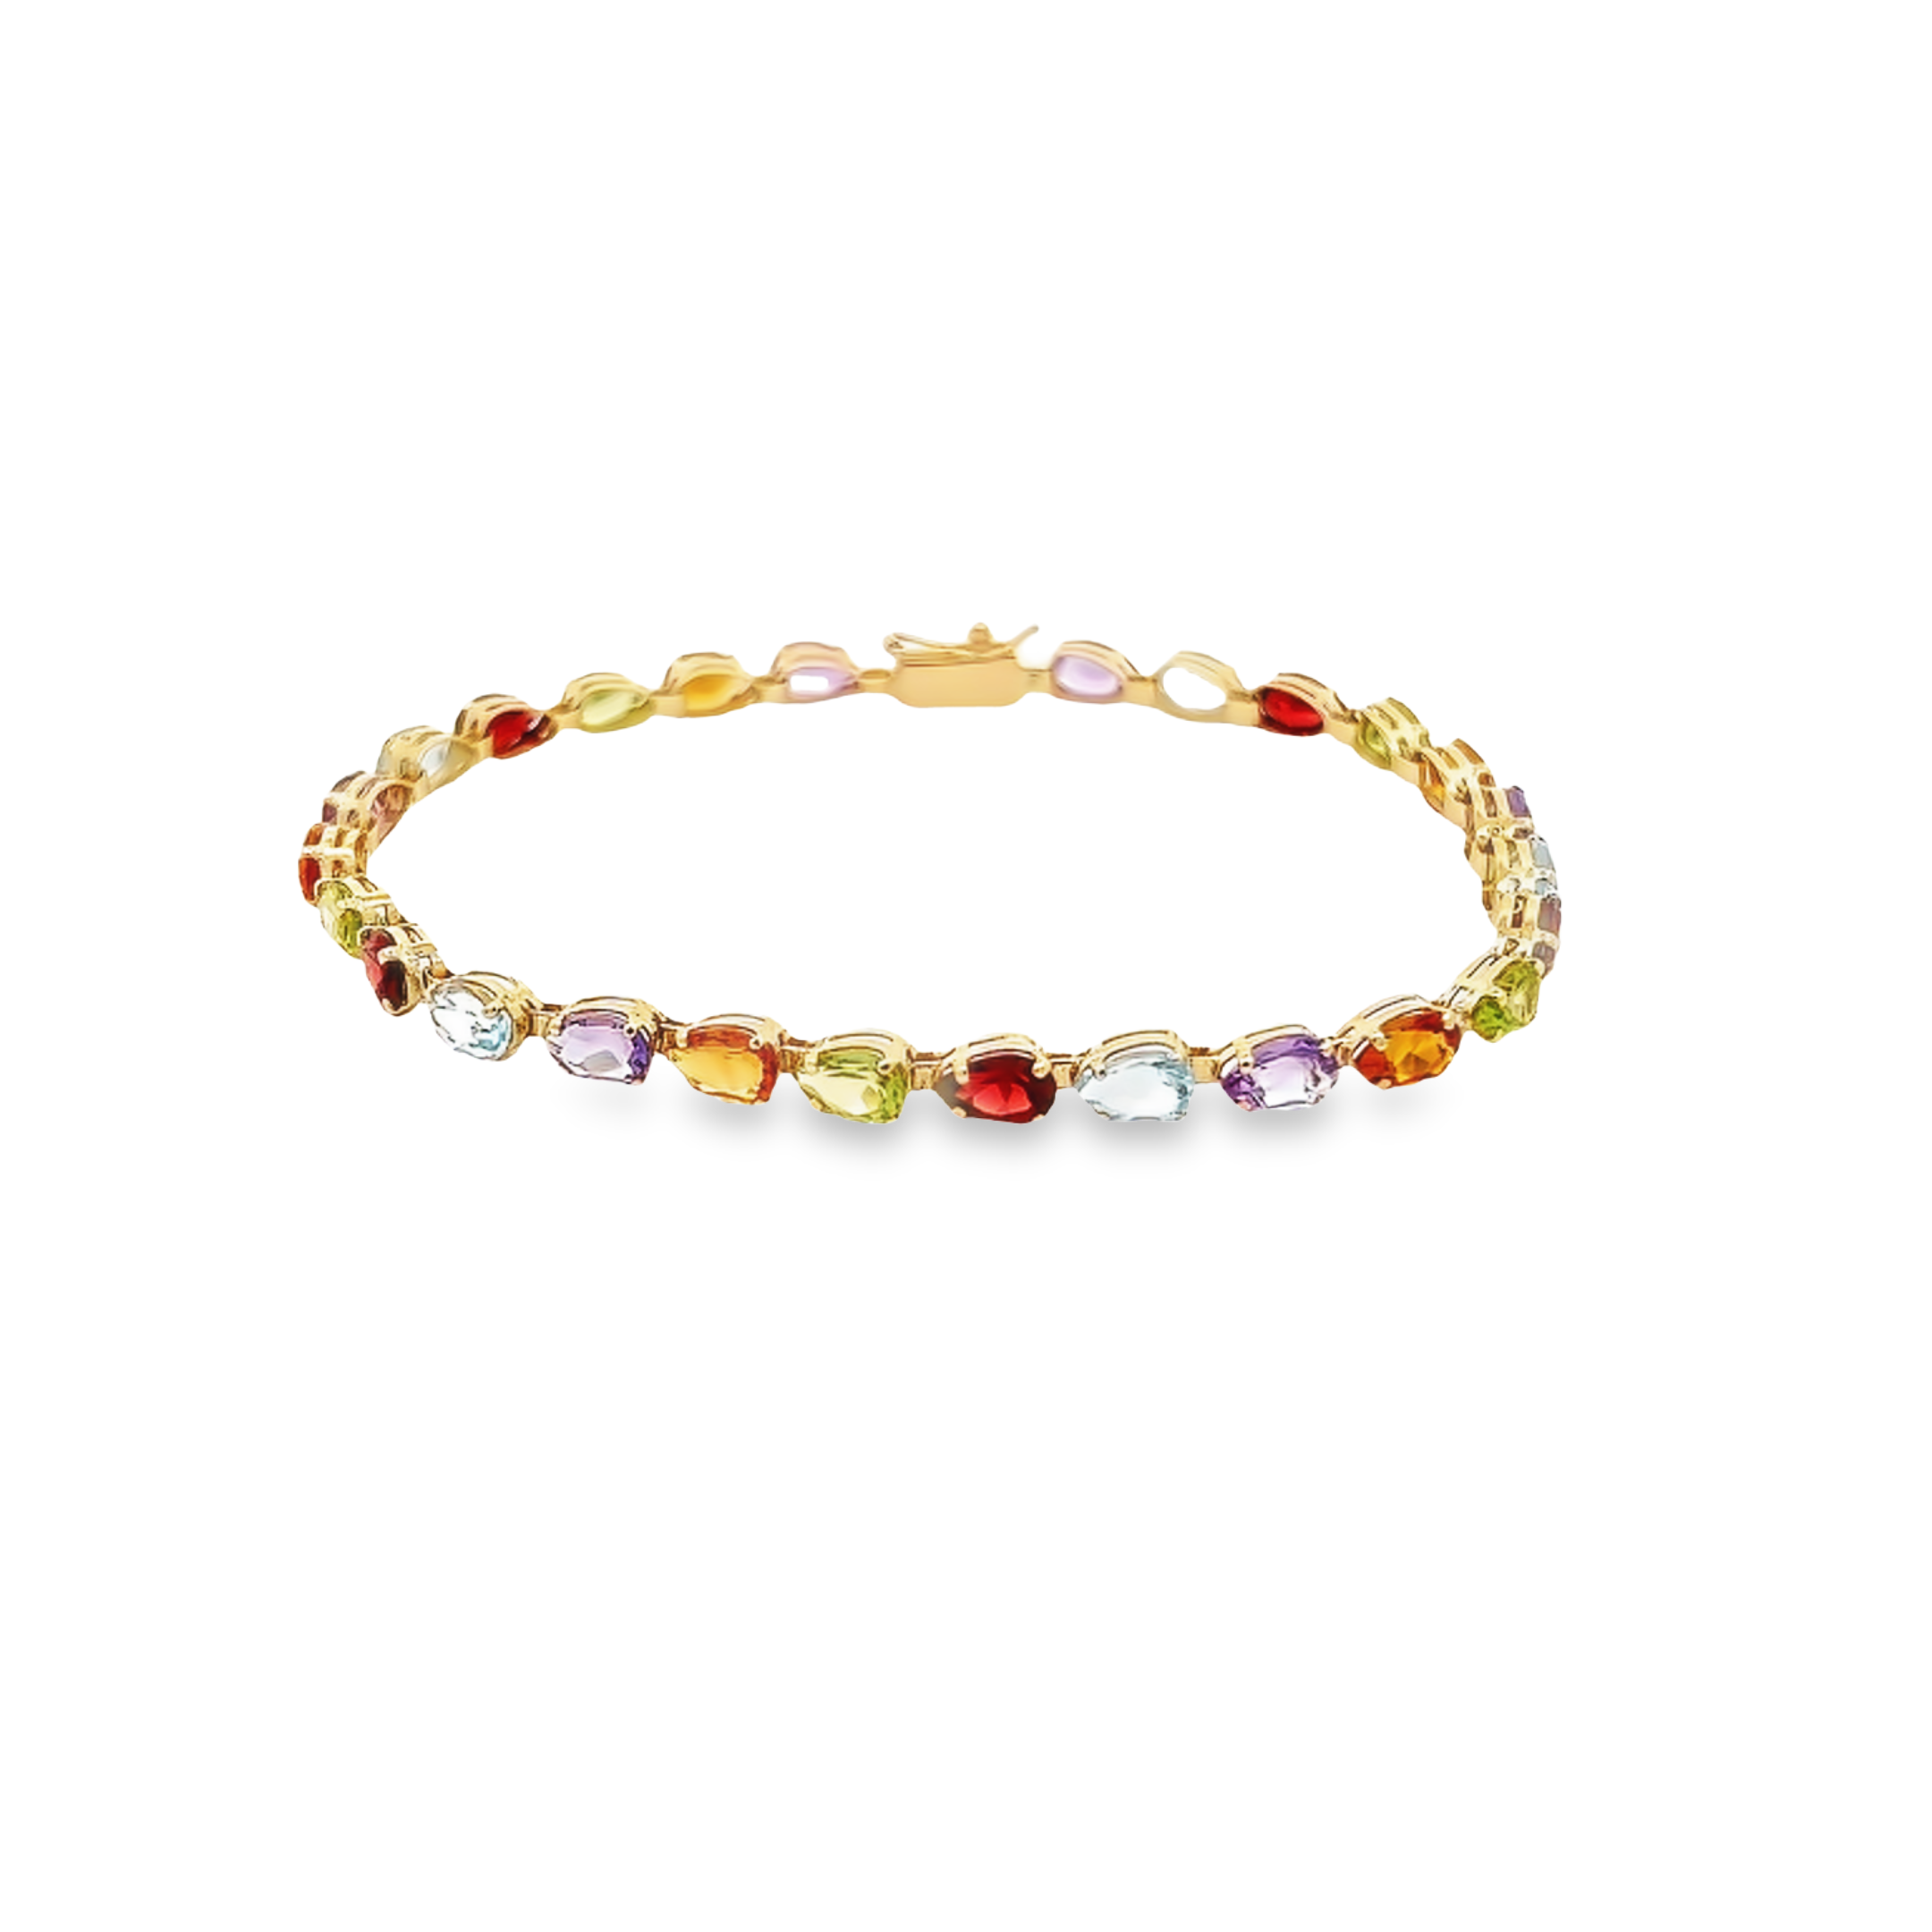 14 Karat yellow gold bracelet with 26 multi colored stones. Length 7.5